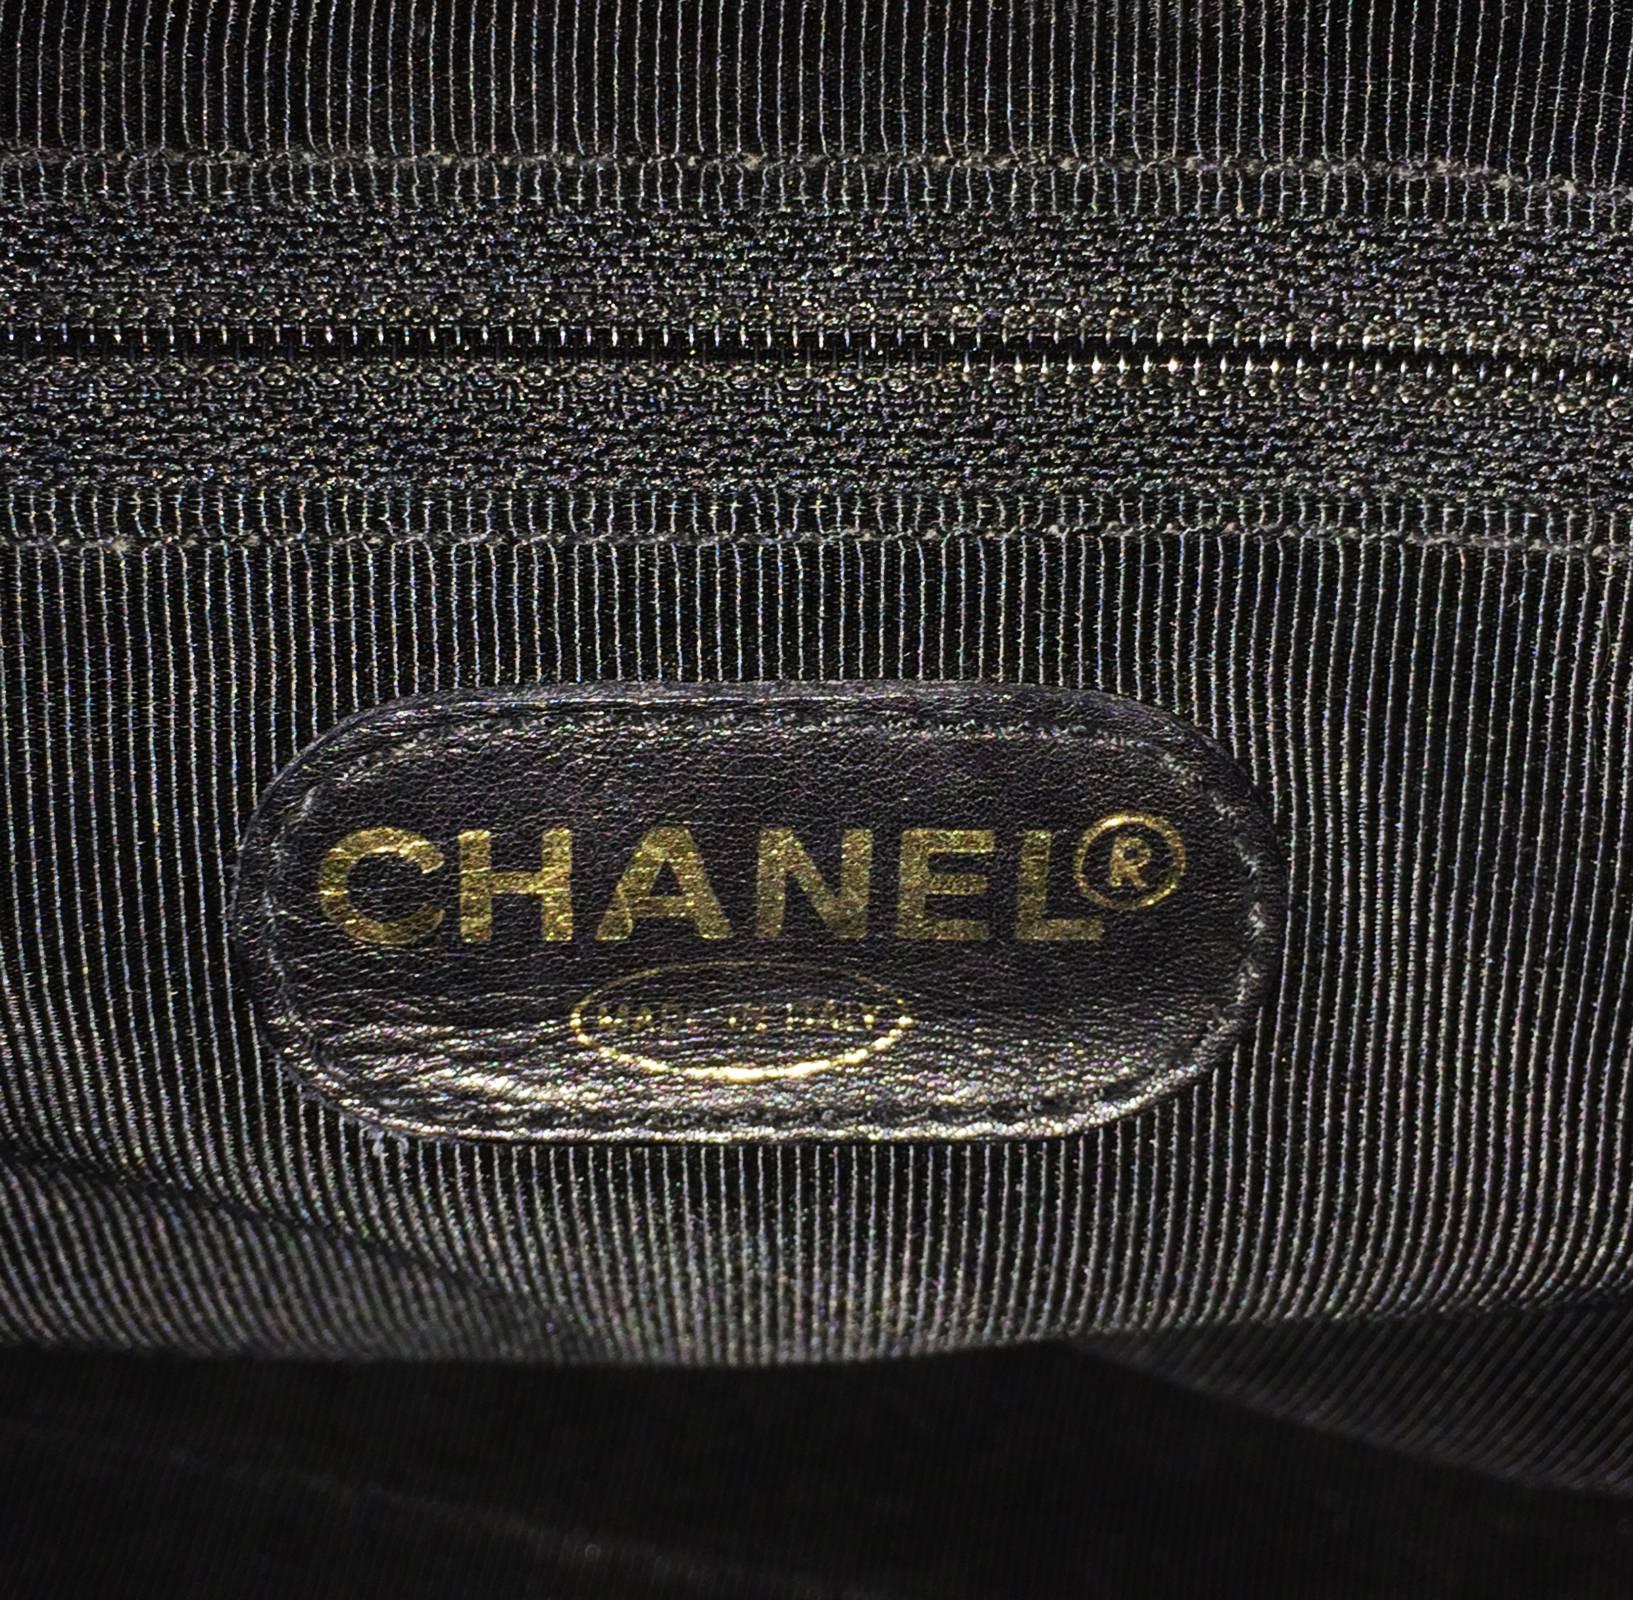 Chanel black caviar leather crossbody bag handbag 3